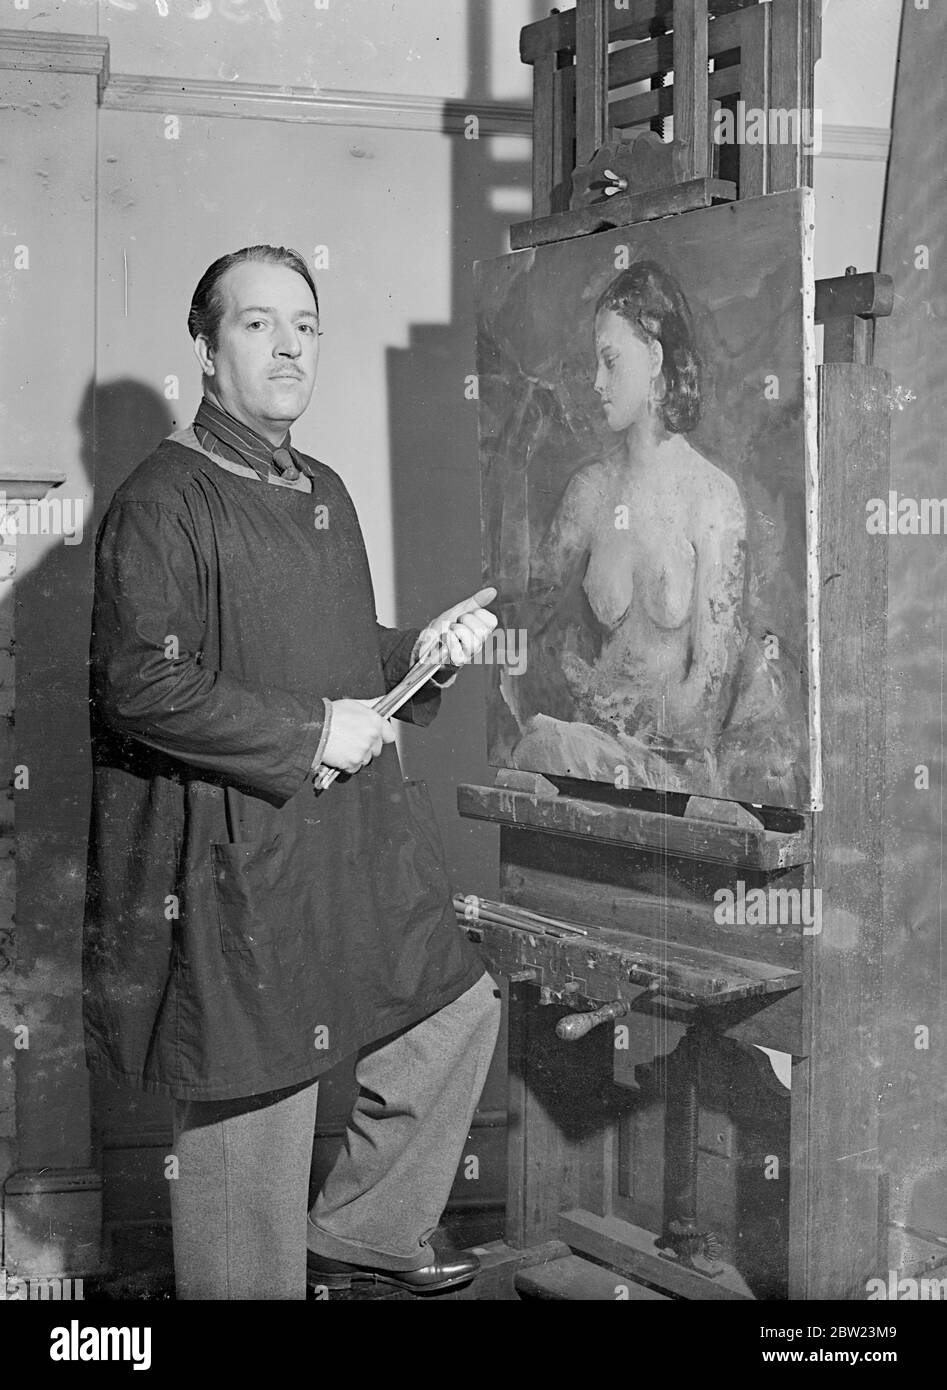 New Royal Academician malte Bank of England Wandmalereien. Alfred Kingsley Lawrence, der für die Wandmalereien in der neuen Bank of England verantwortlich ist, wurde zum Royal Academician gewählt. 16 Februar 1938 Stockfoto